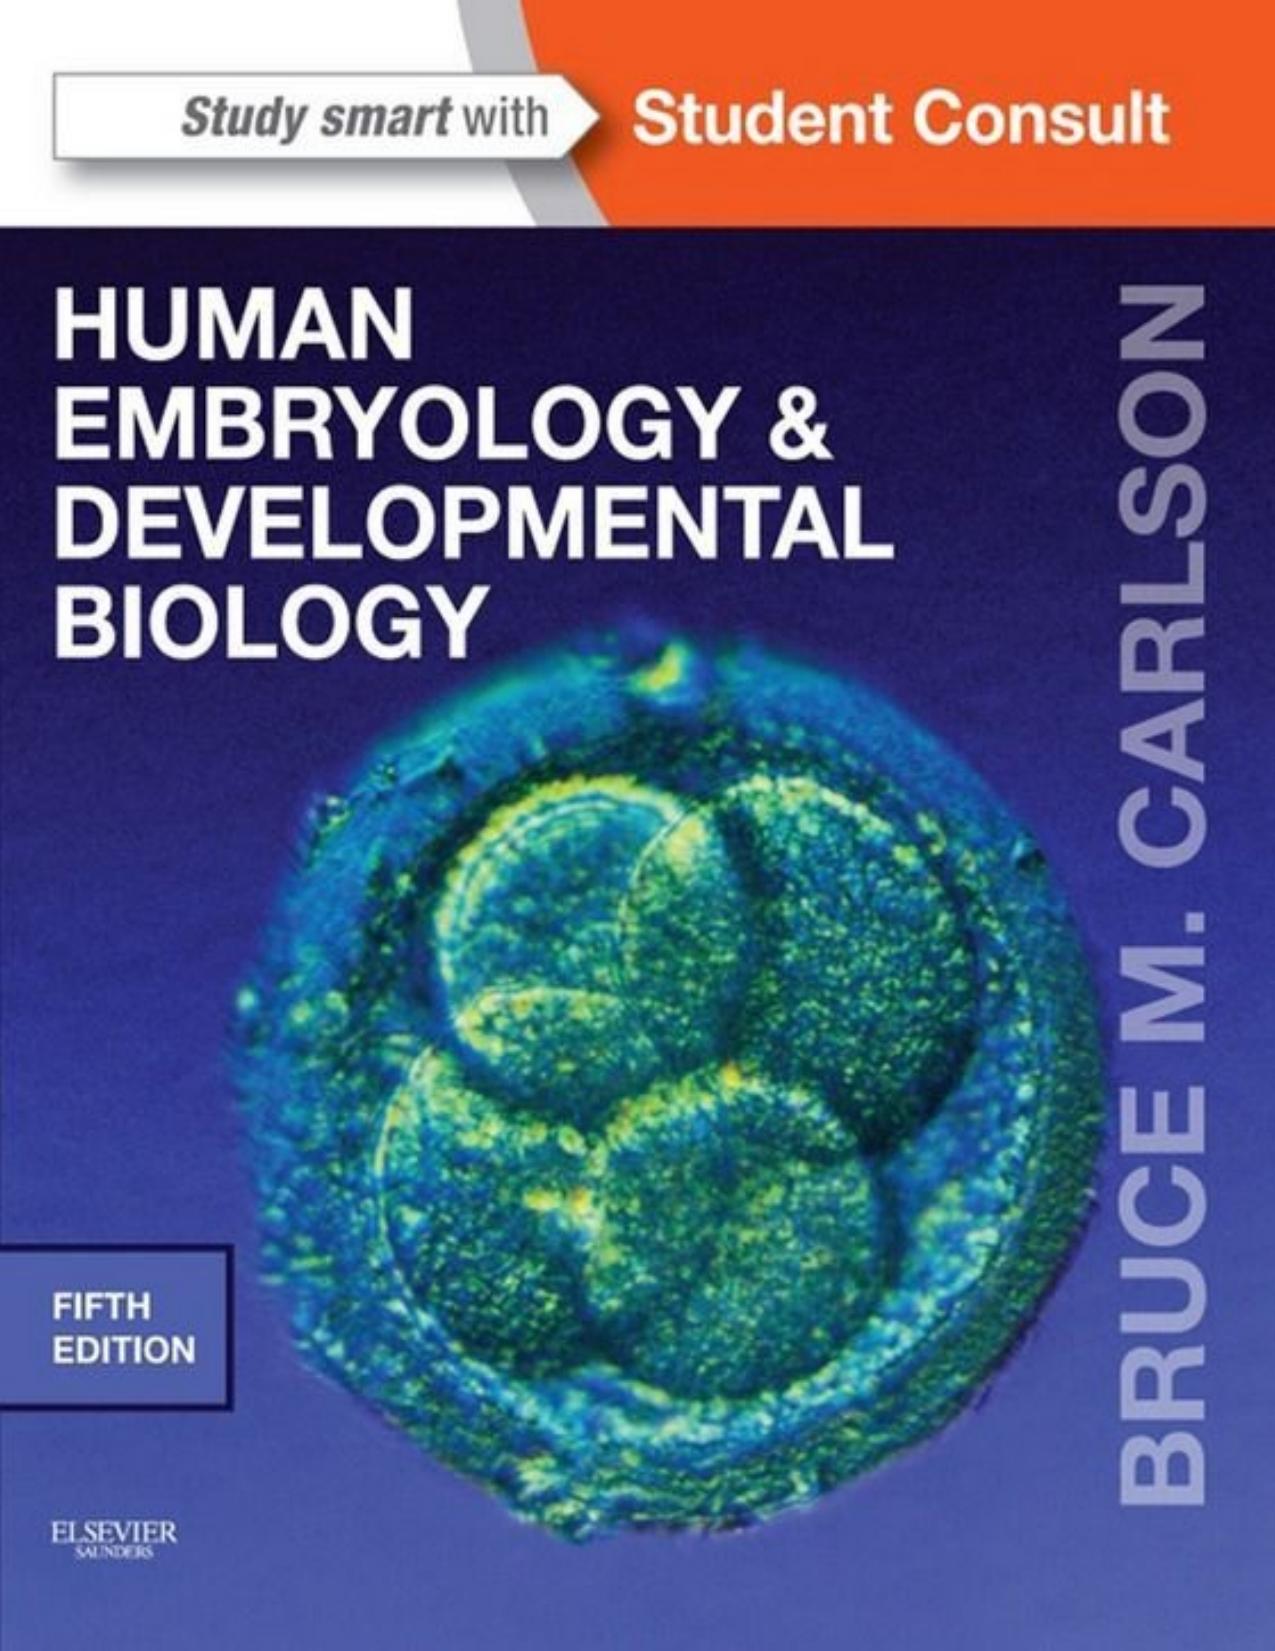 Human Embryology and Developmental Biology \(5th edition\) - PDFDrive.com